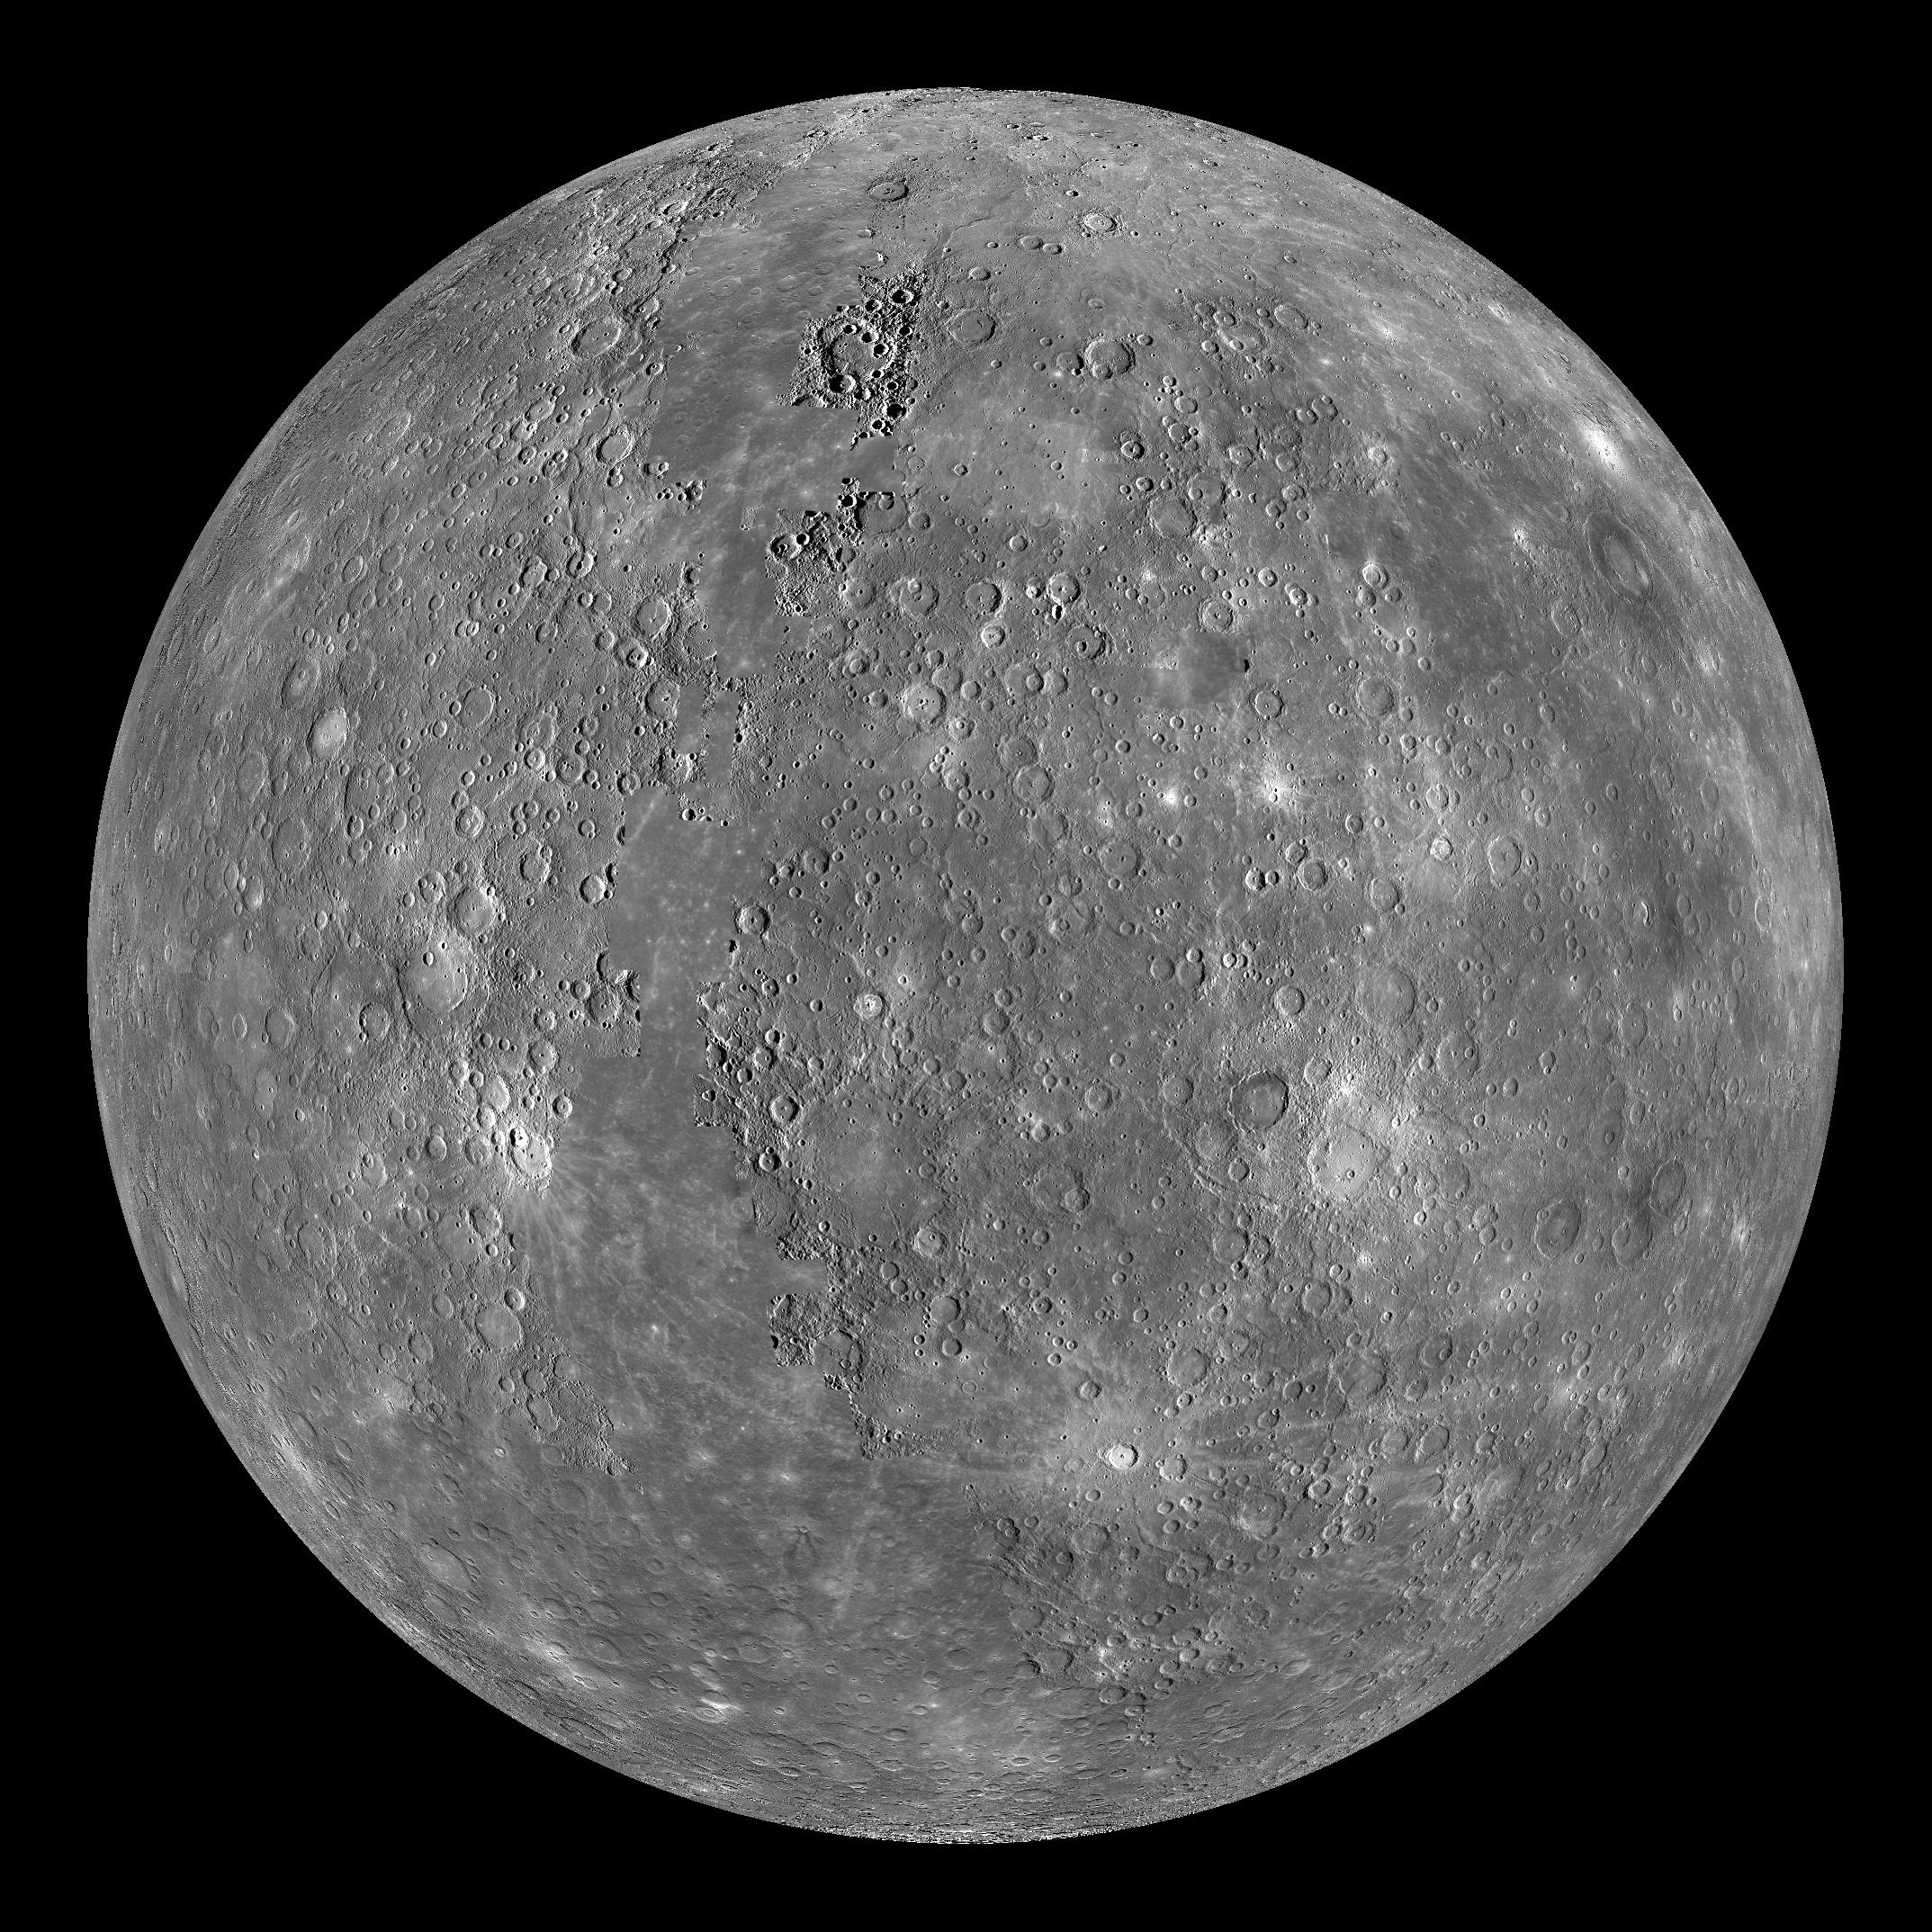 Mercury_Globe-MESSENGER_mosaic_centered_at_0degN-0degE